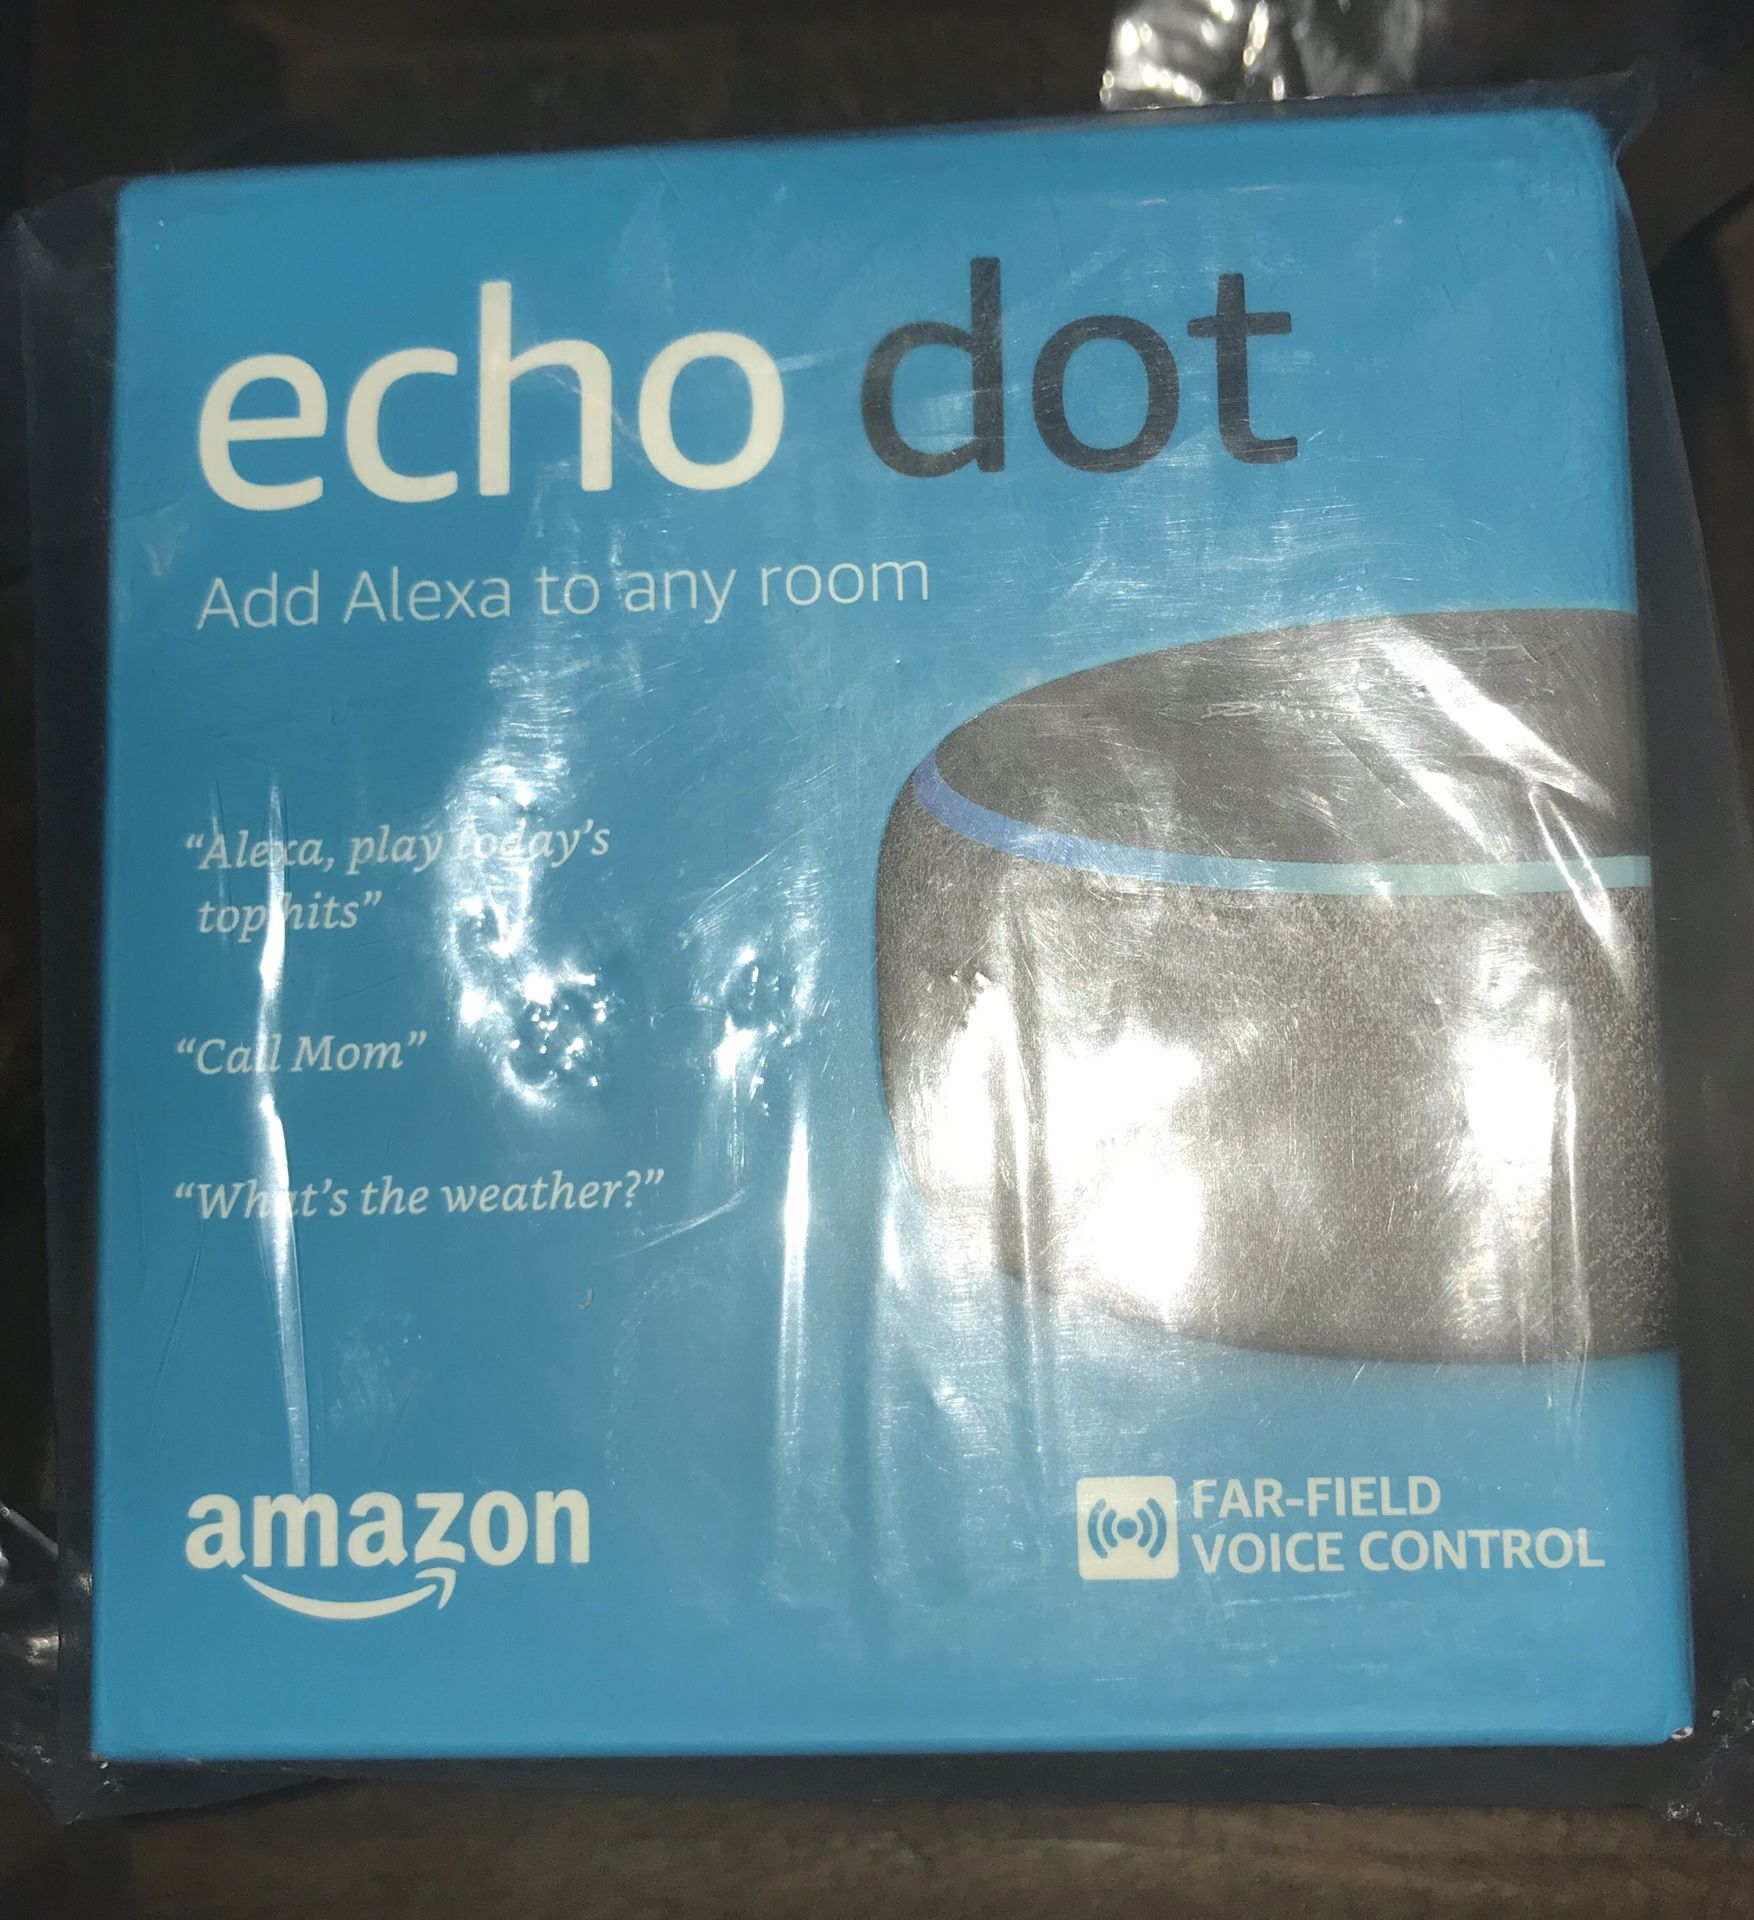 3rd generation echo dot “Alexa”